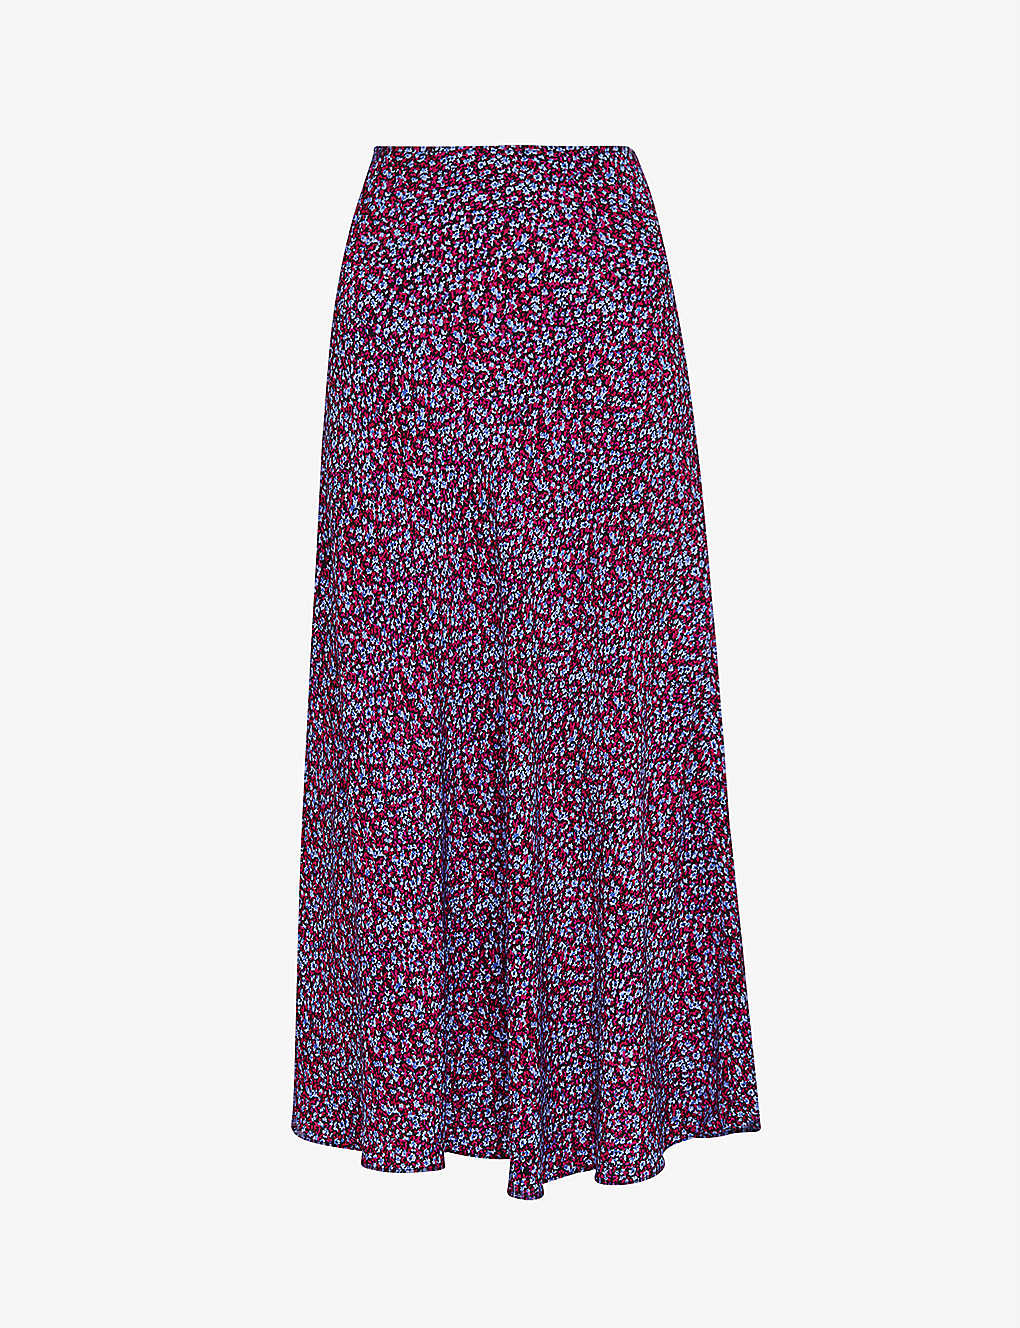 Whistles Floral Garden Bias Cut Midi Skirt In Multi-coloured